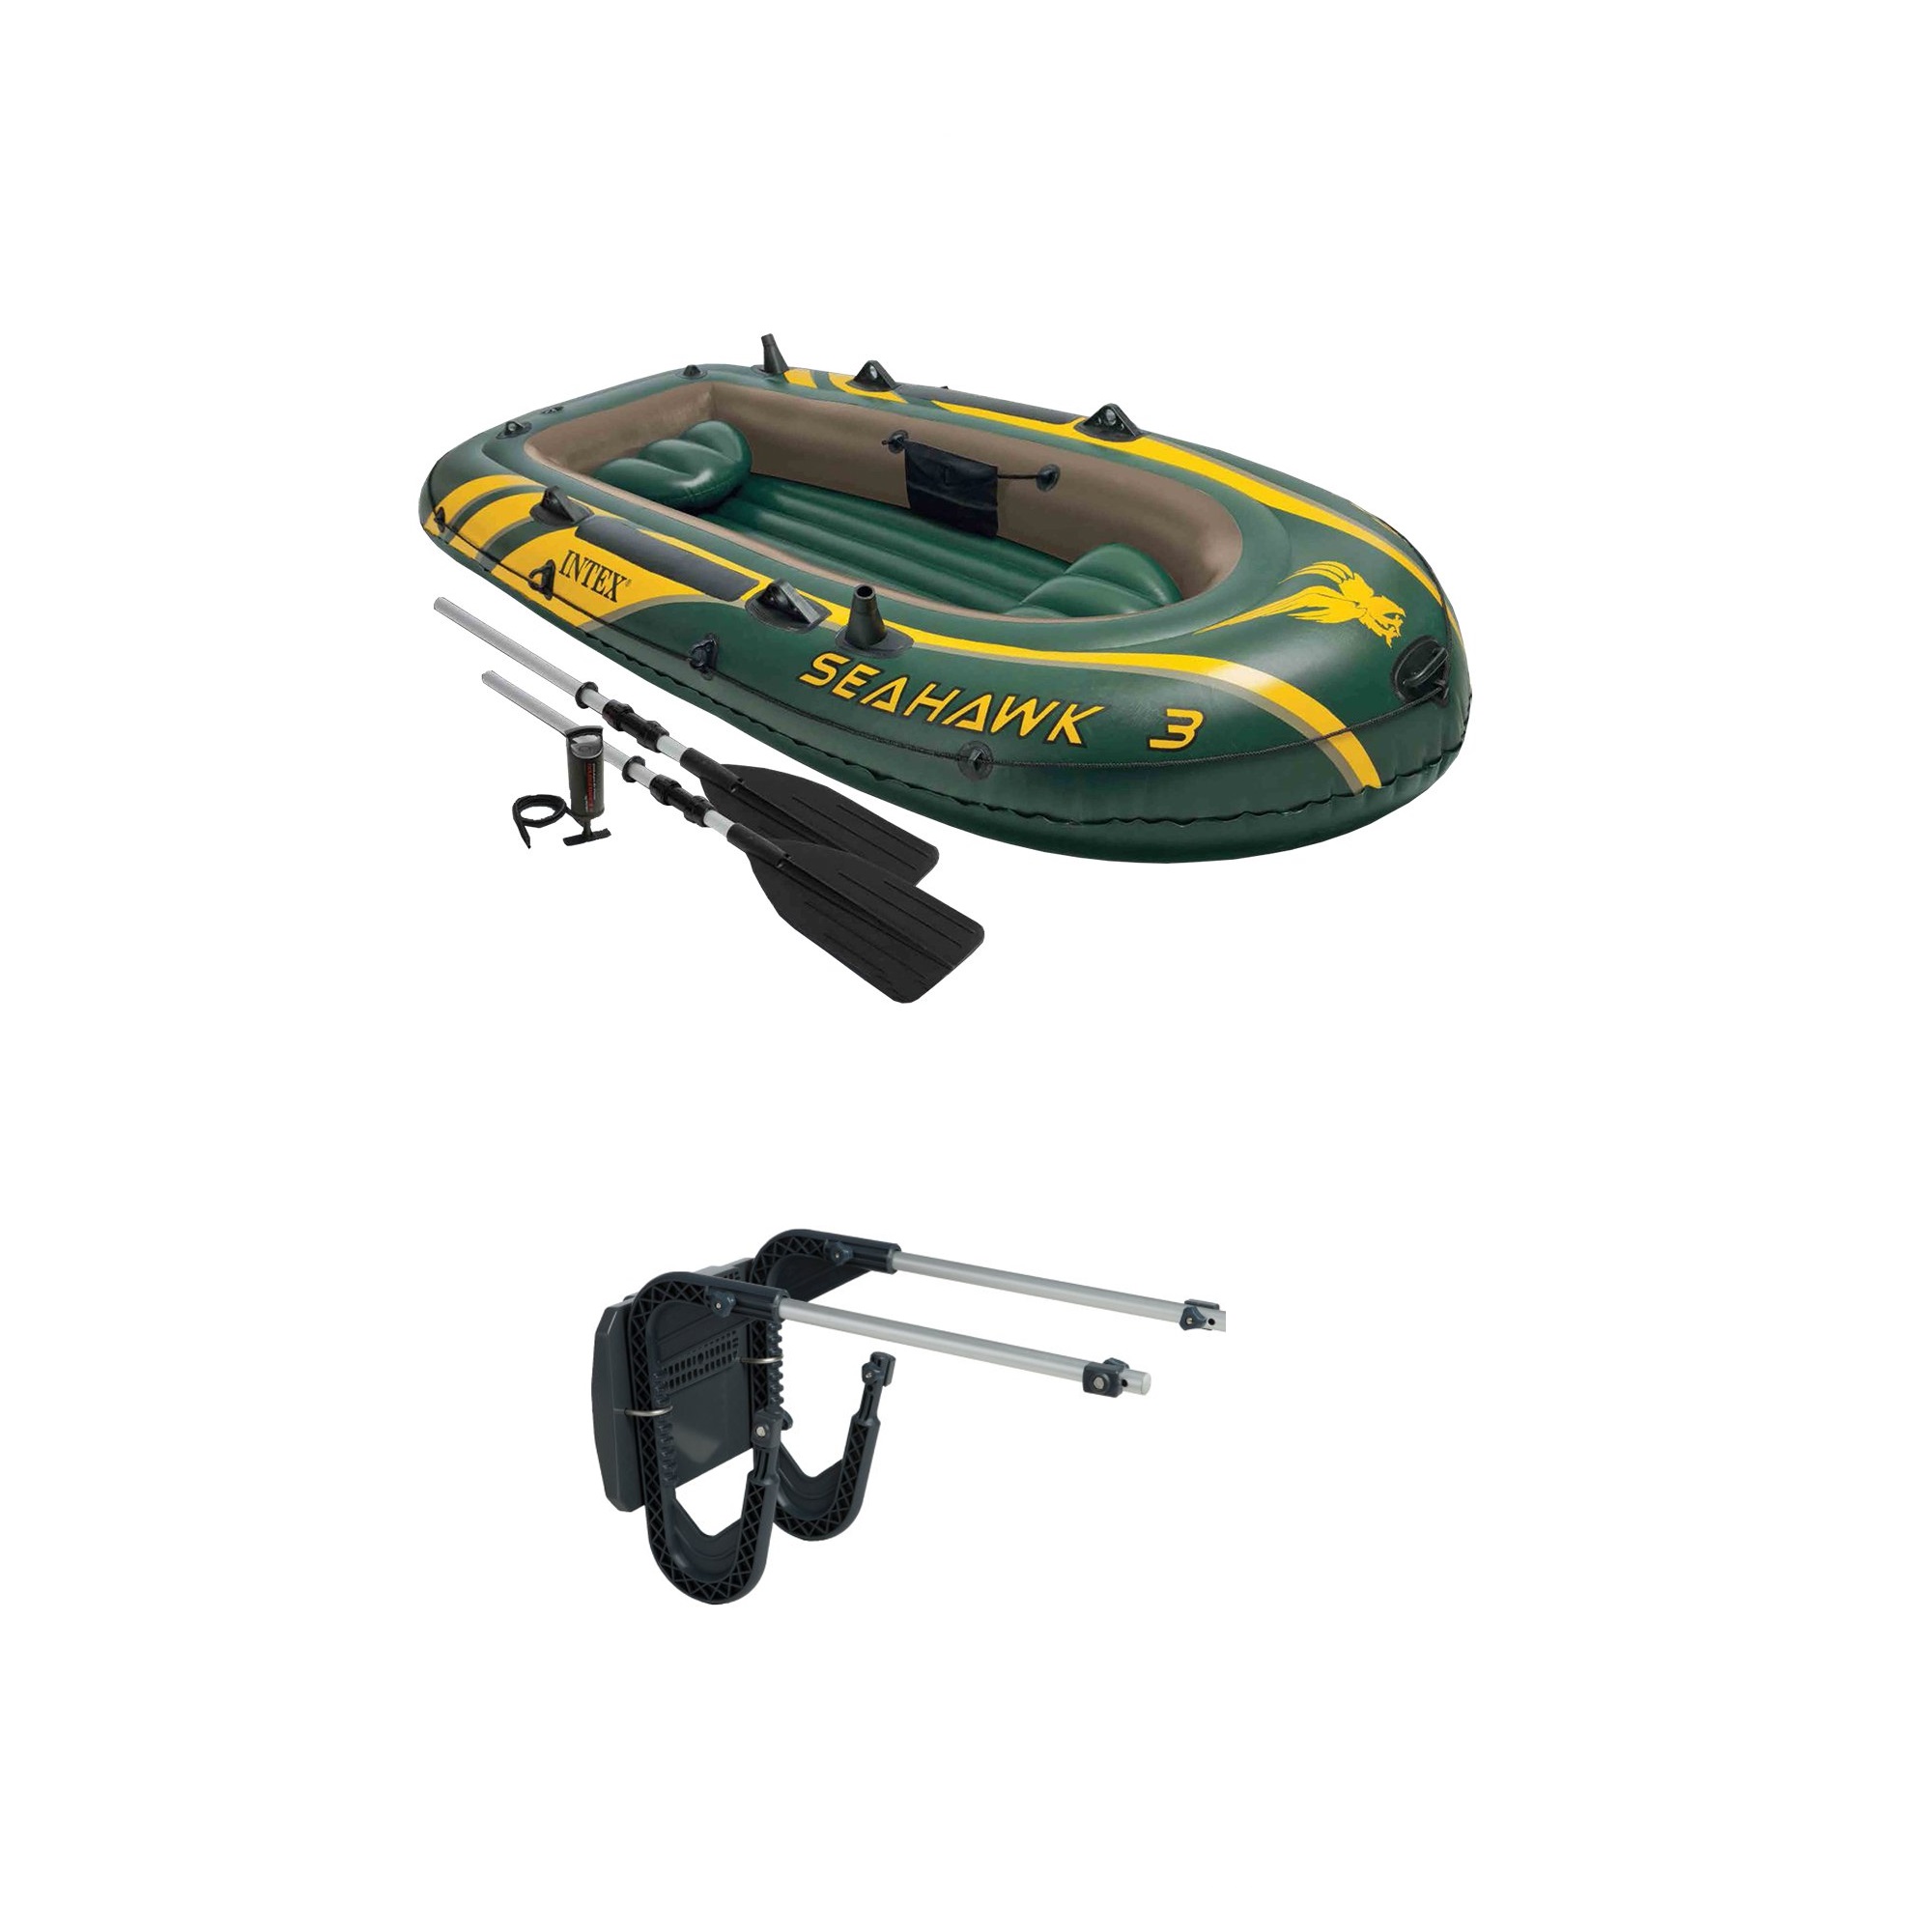 Intex 3 Person Boat Set w/ Aluminum Oars & Pump and Composite Boat Motor Mount - Click1Get2 Offers